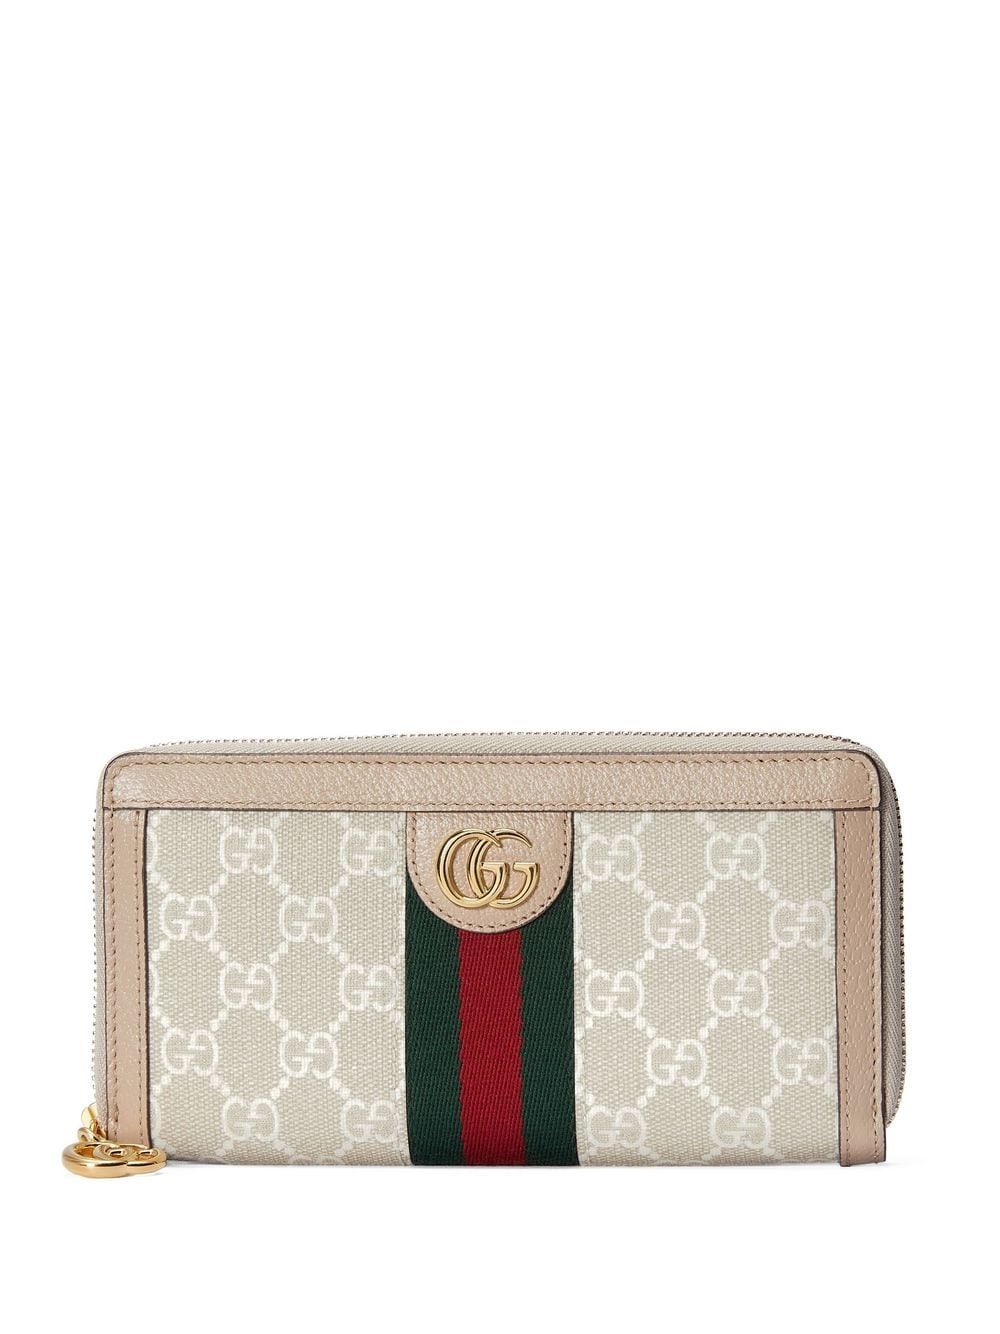 Gucci Ophidia GG zip around wallet - White